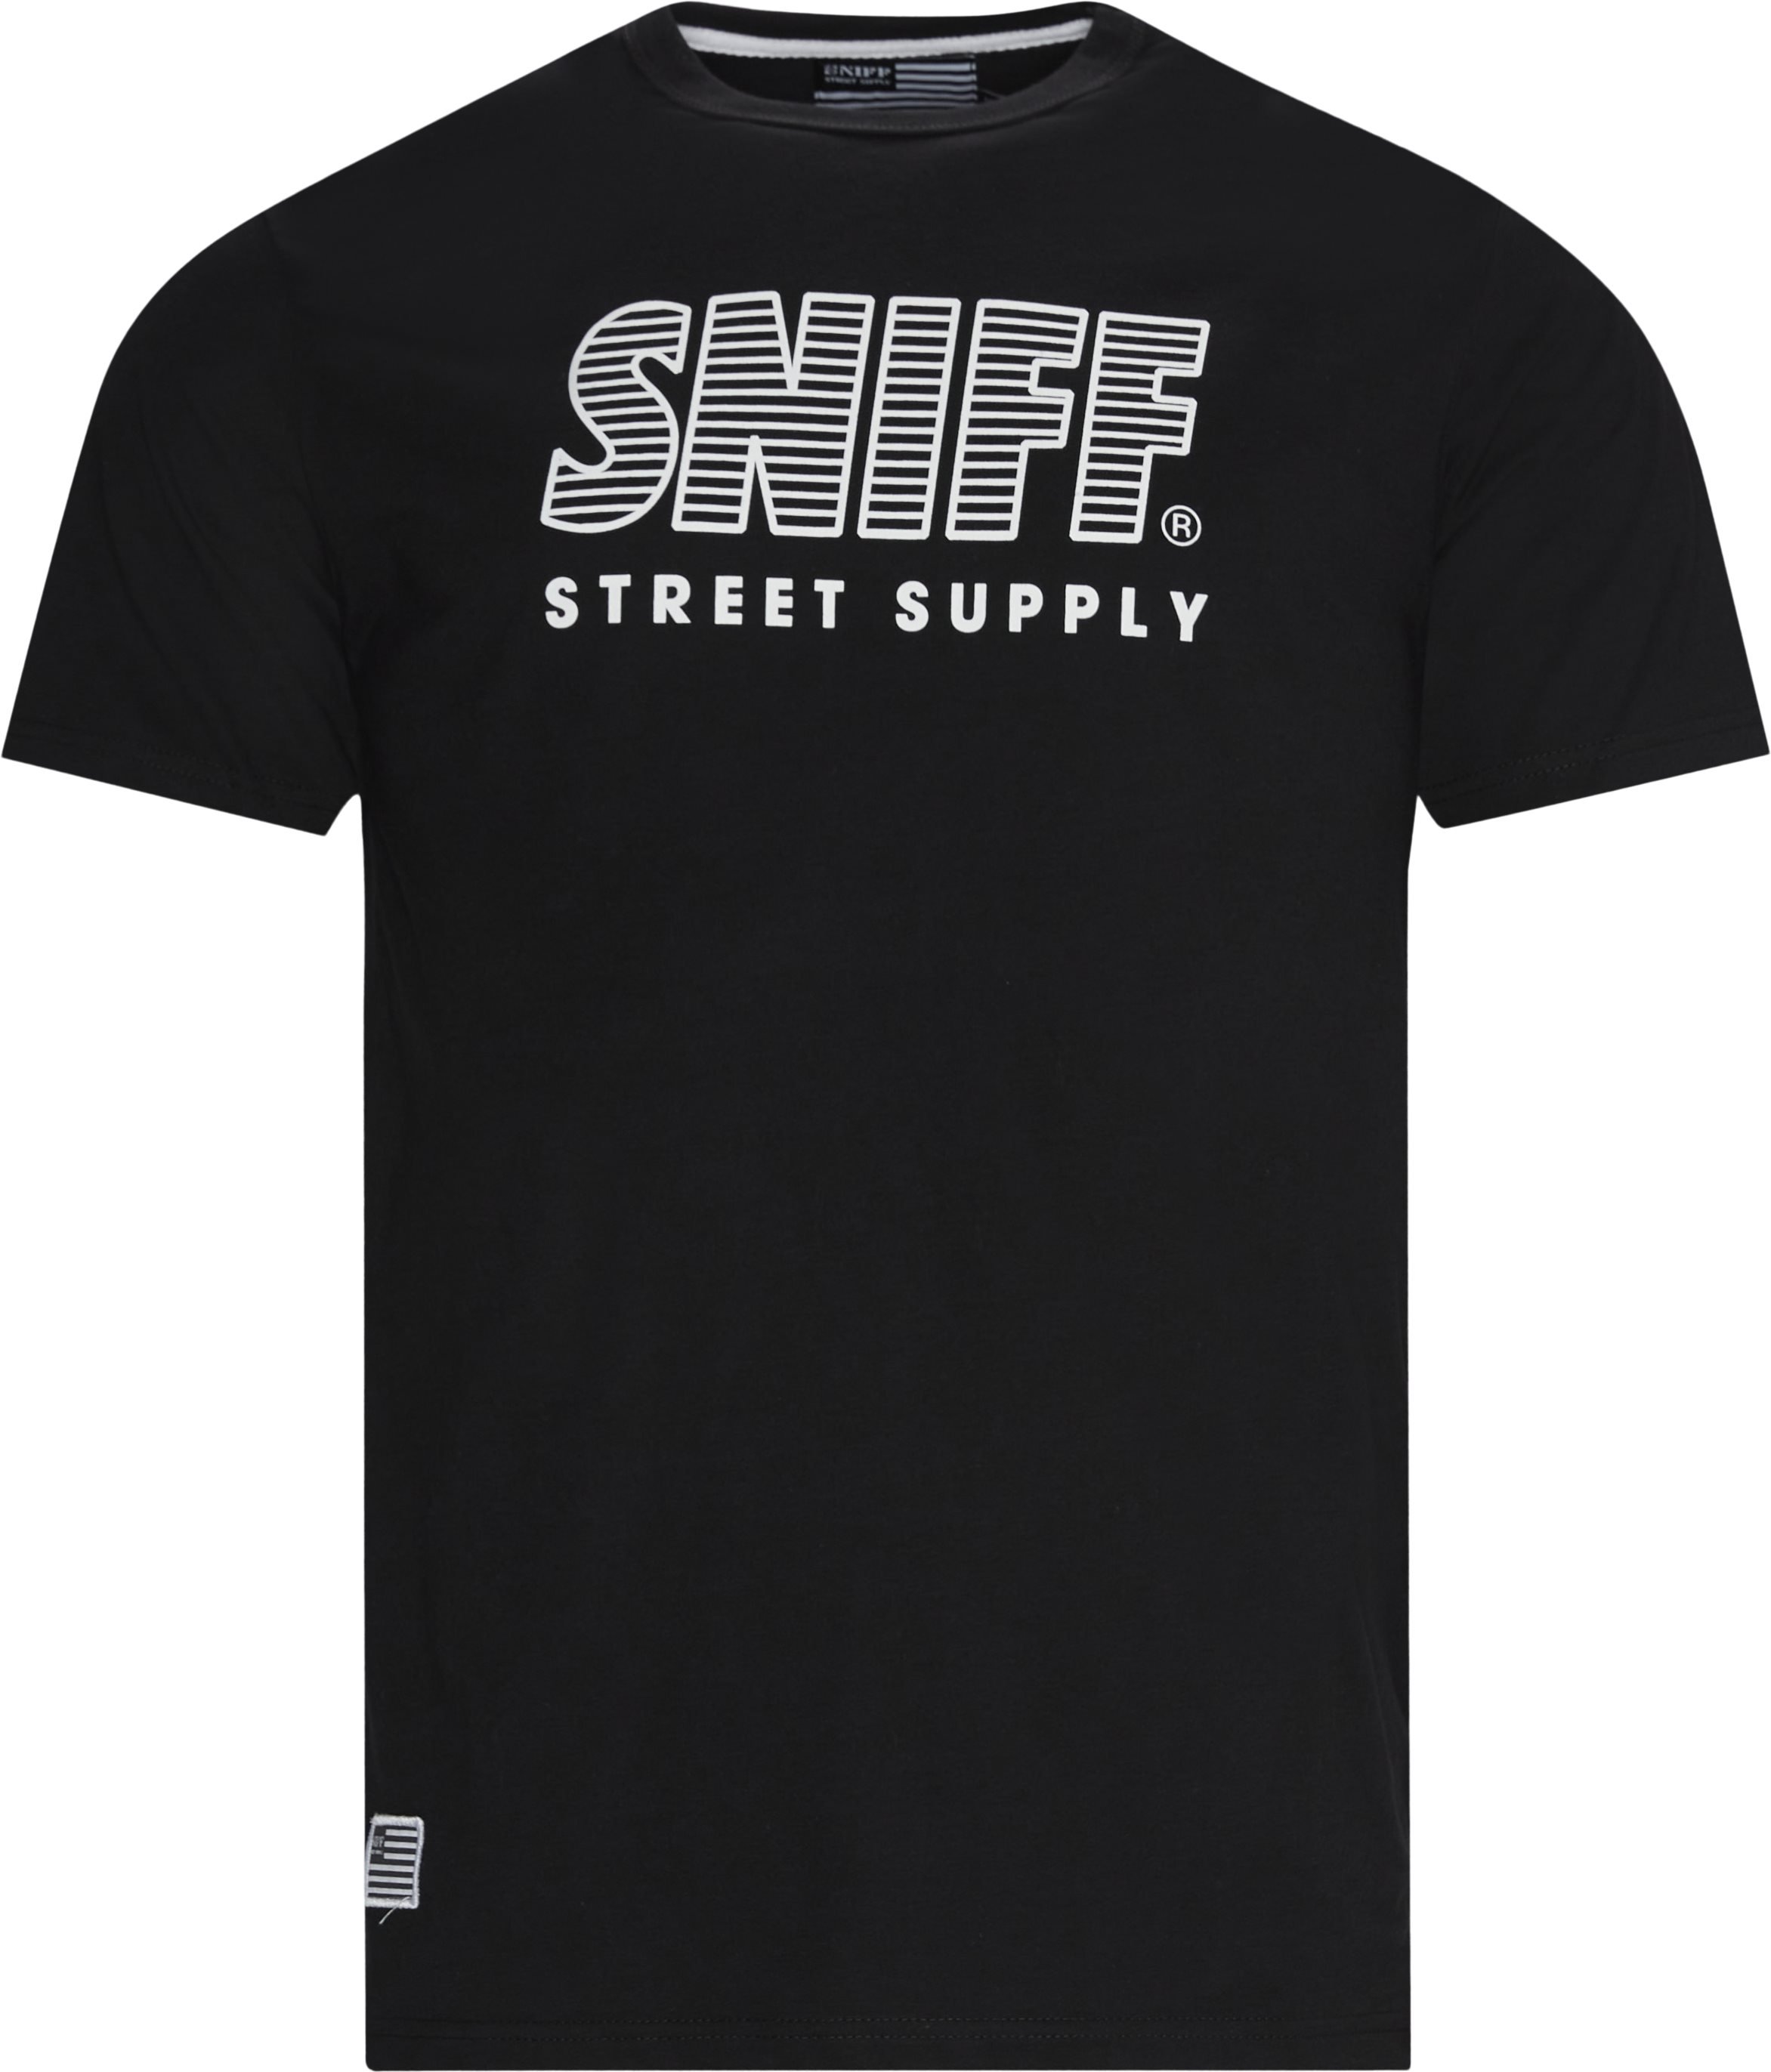 Bor tee - T-shirts - Regular fit - Svart